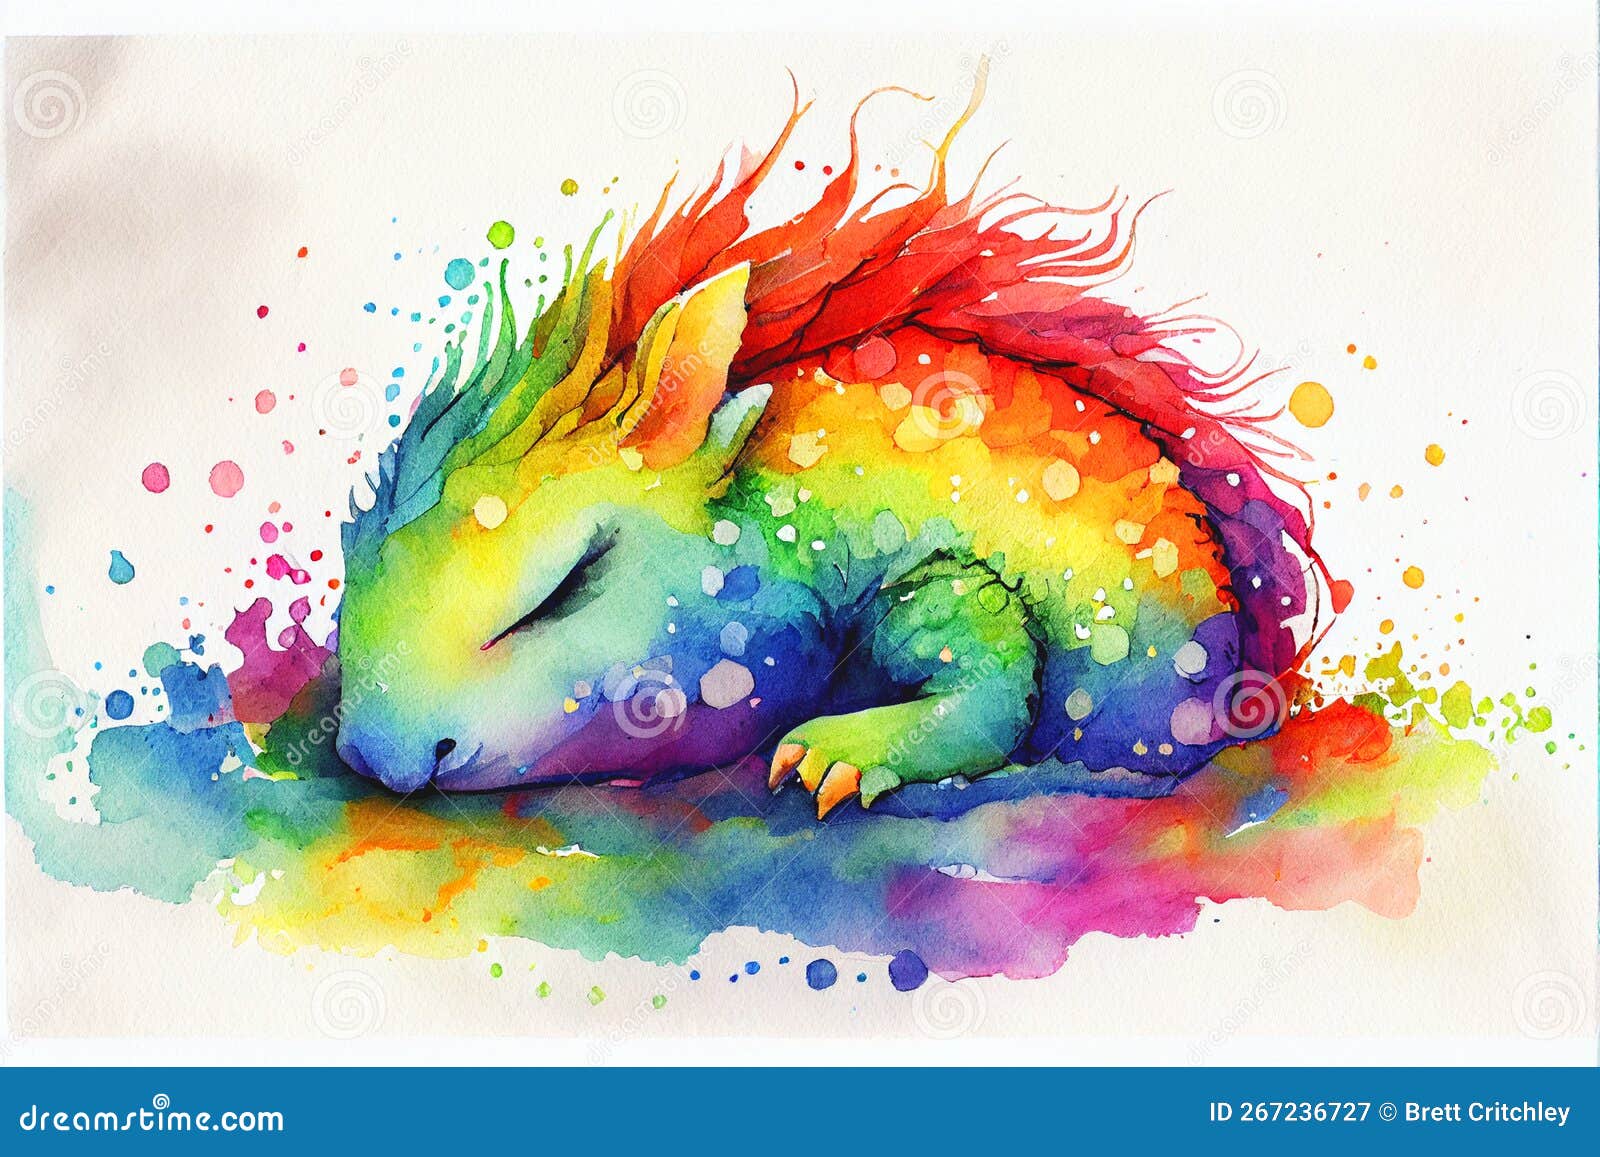 Sleeping Baby Dragon Watercolor Painting Animal Animals Stock ...